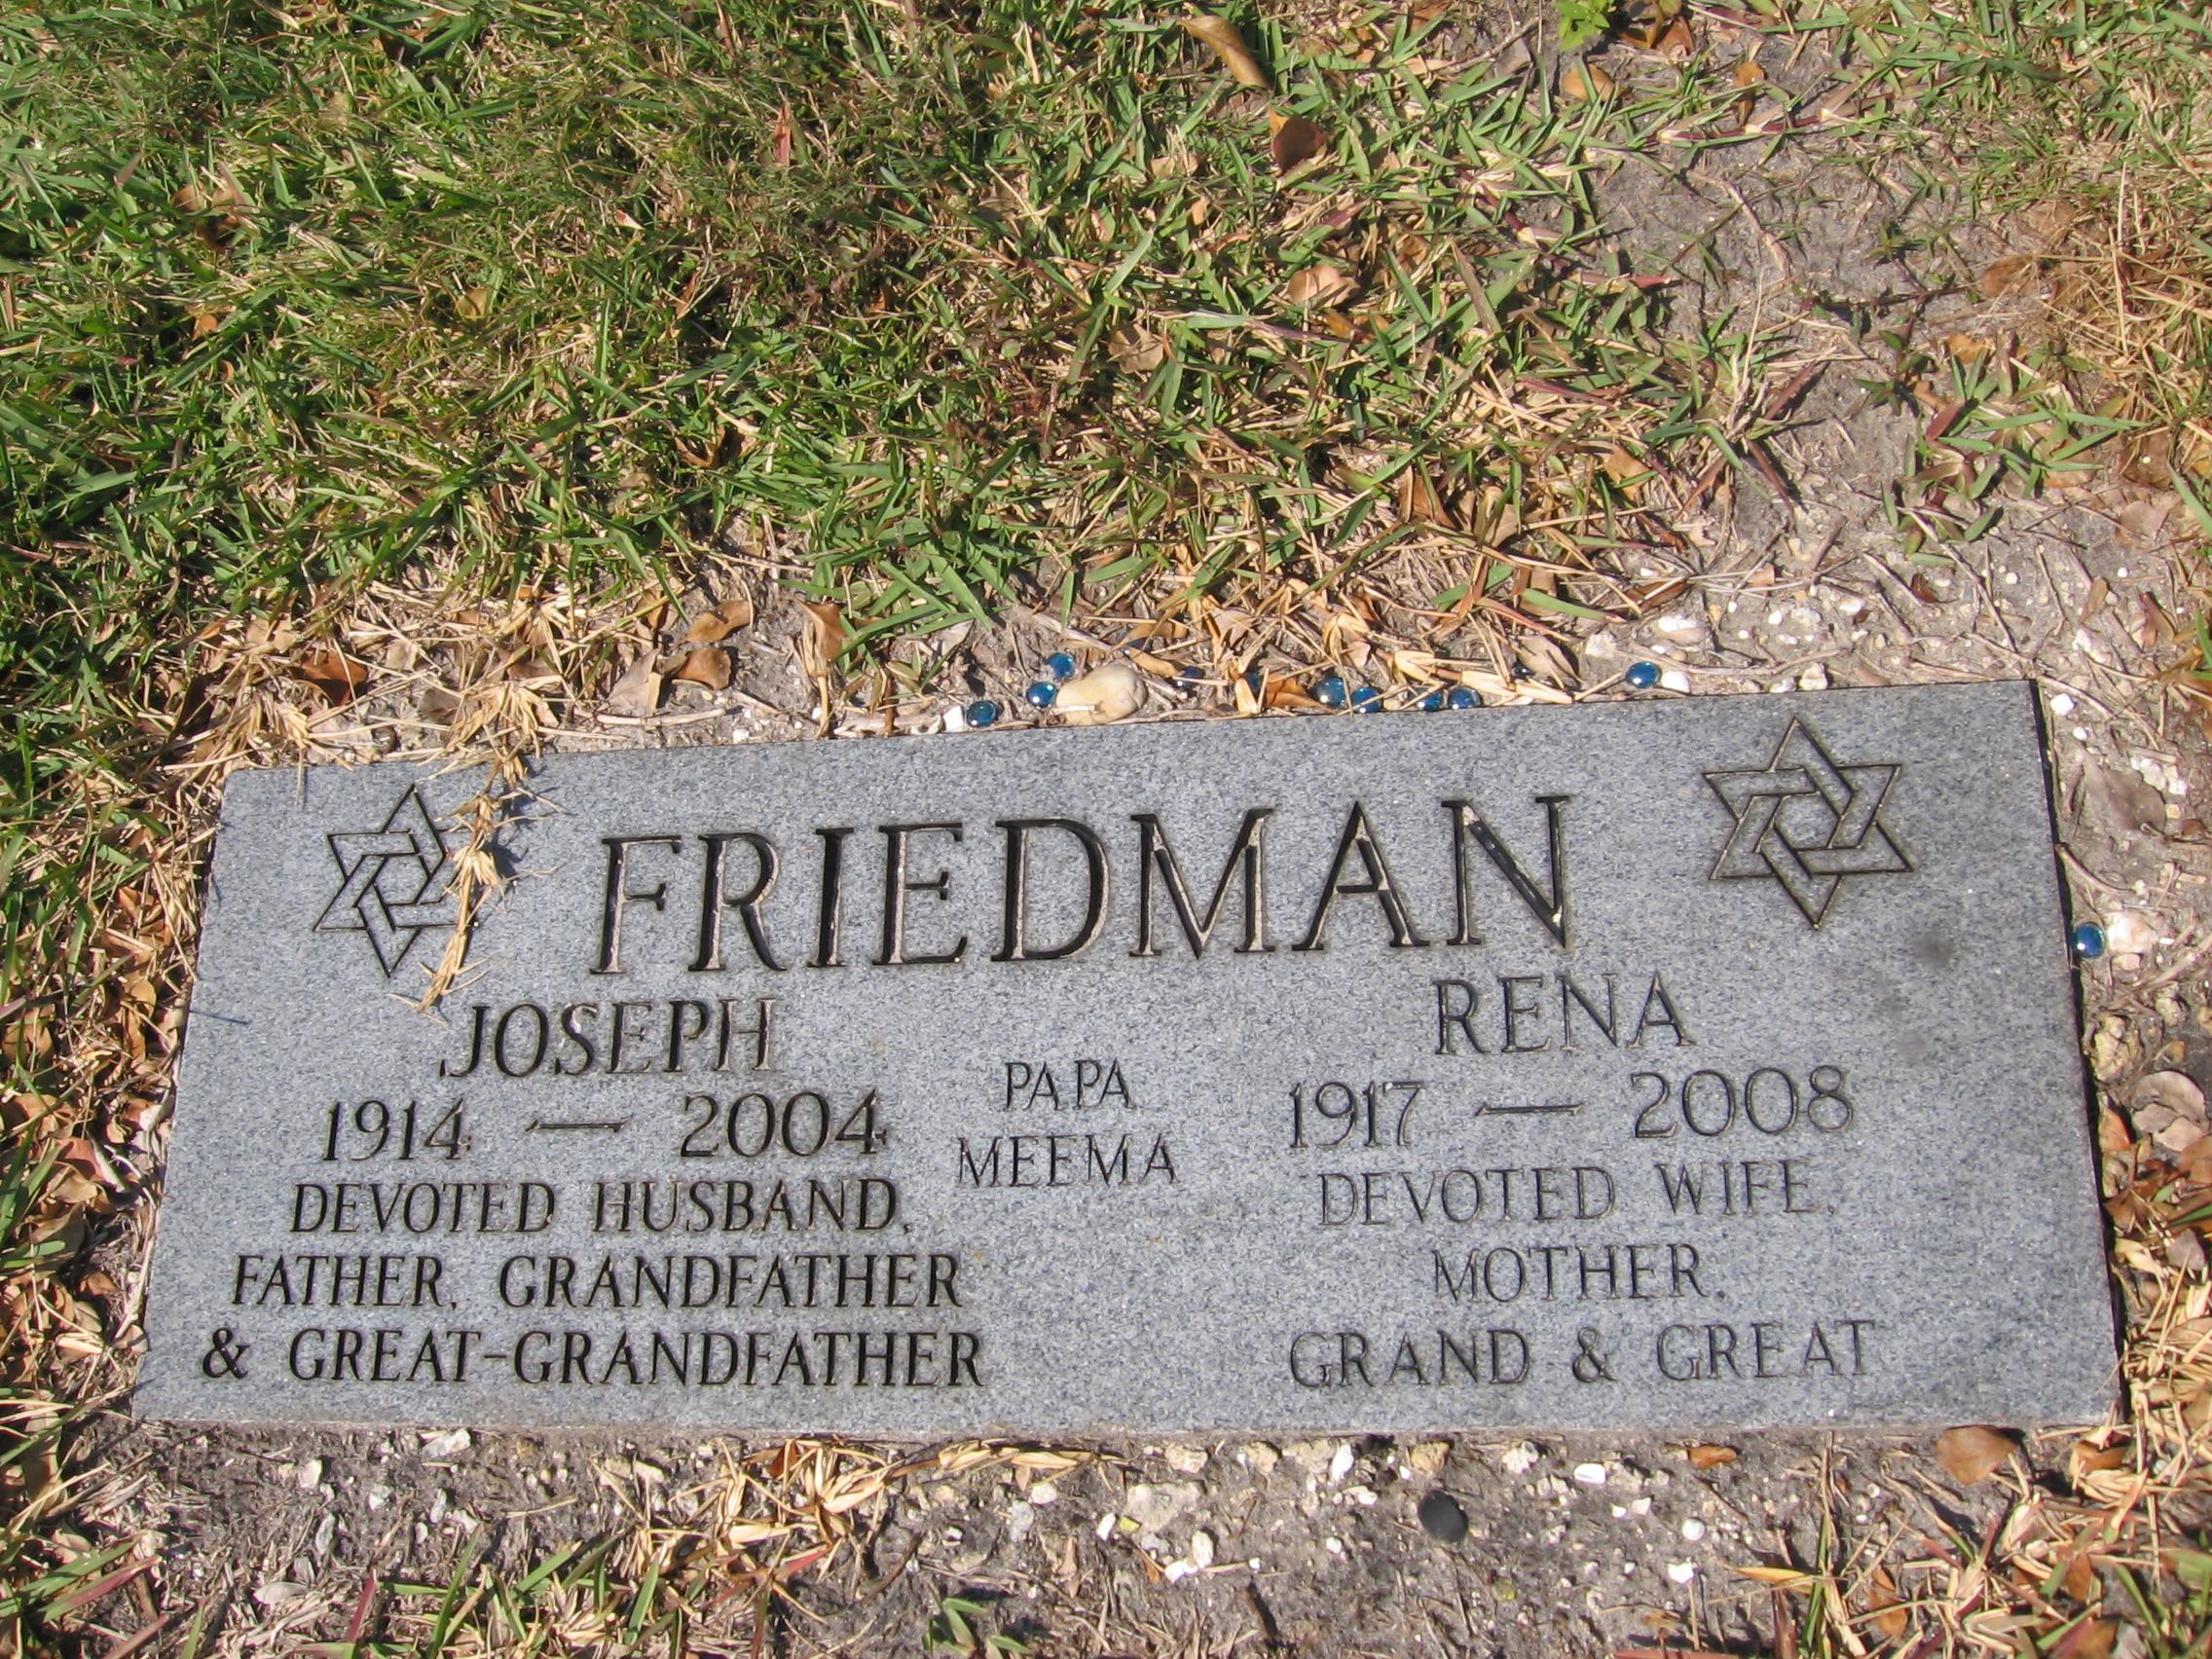 Joseph "Papa" Friedman